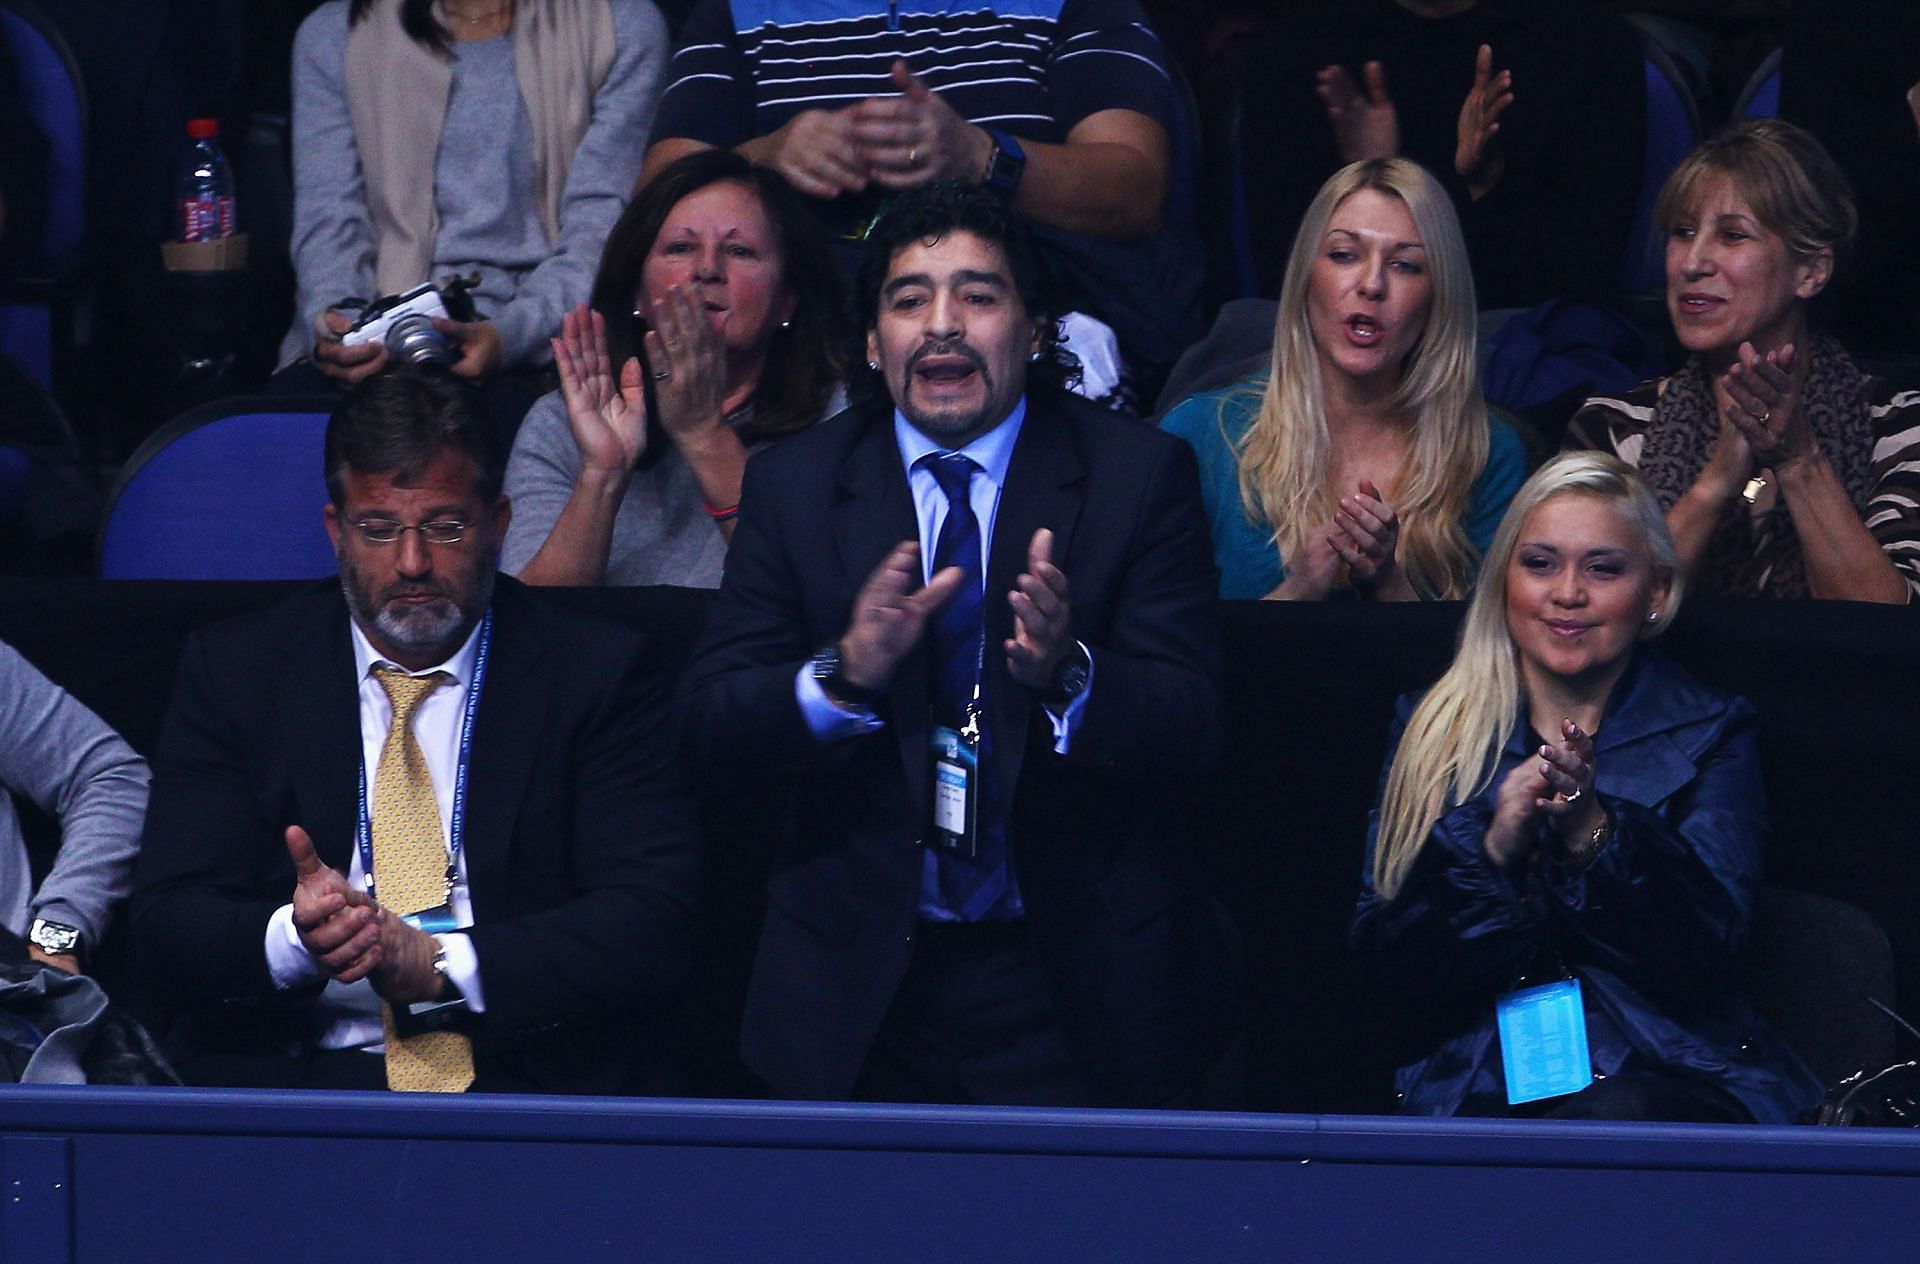 Diego Maradone watches Novak Djokovic take on Tomas Berdych at the 2010 ATP World Tour Finals.